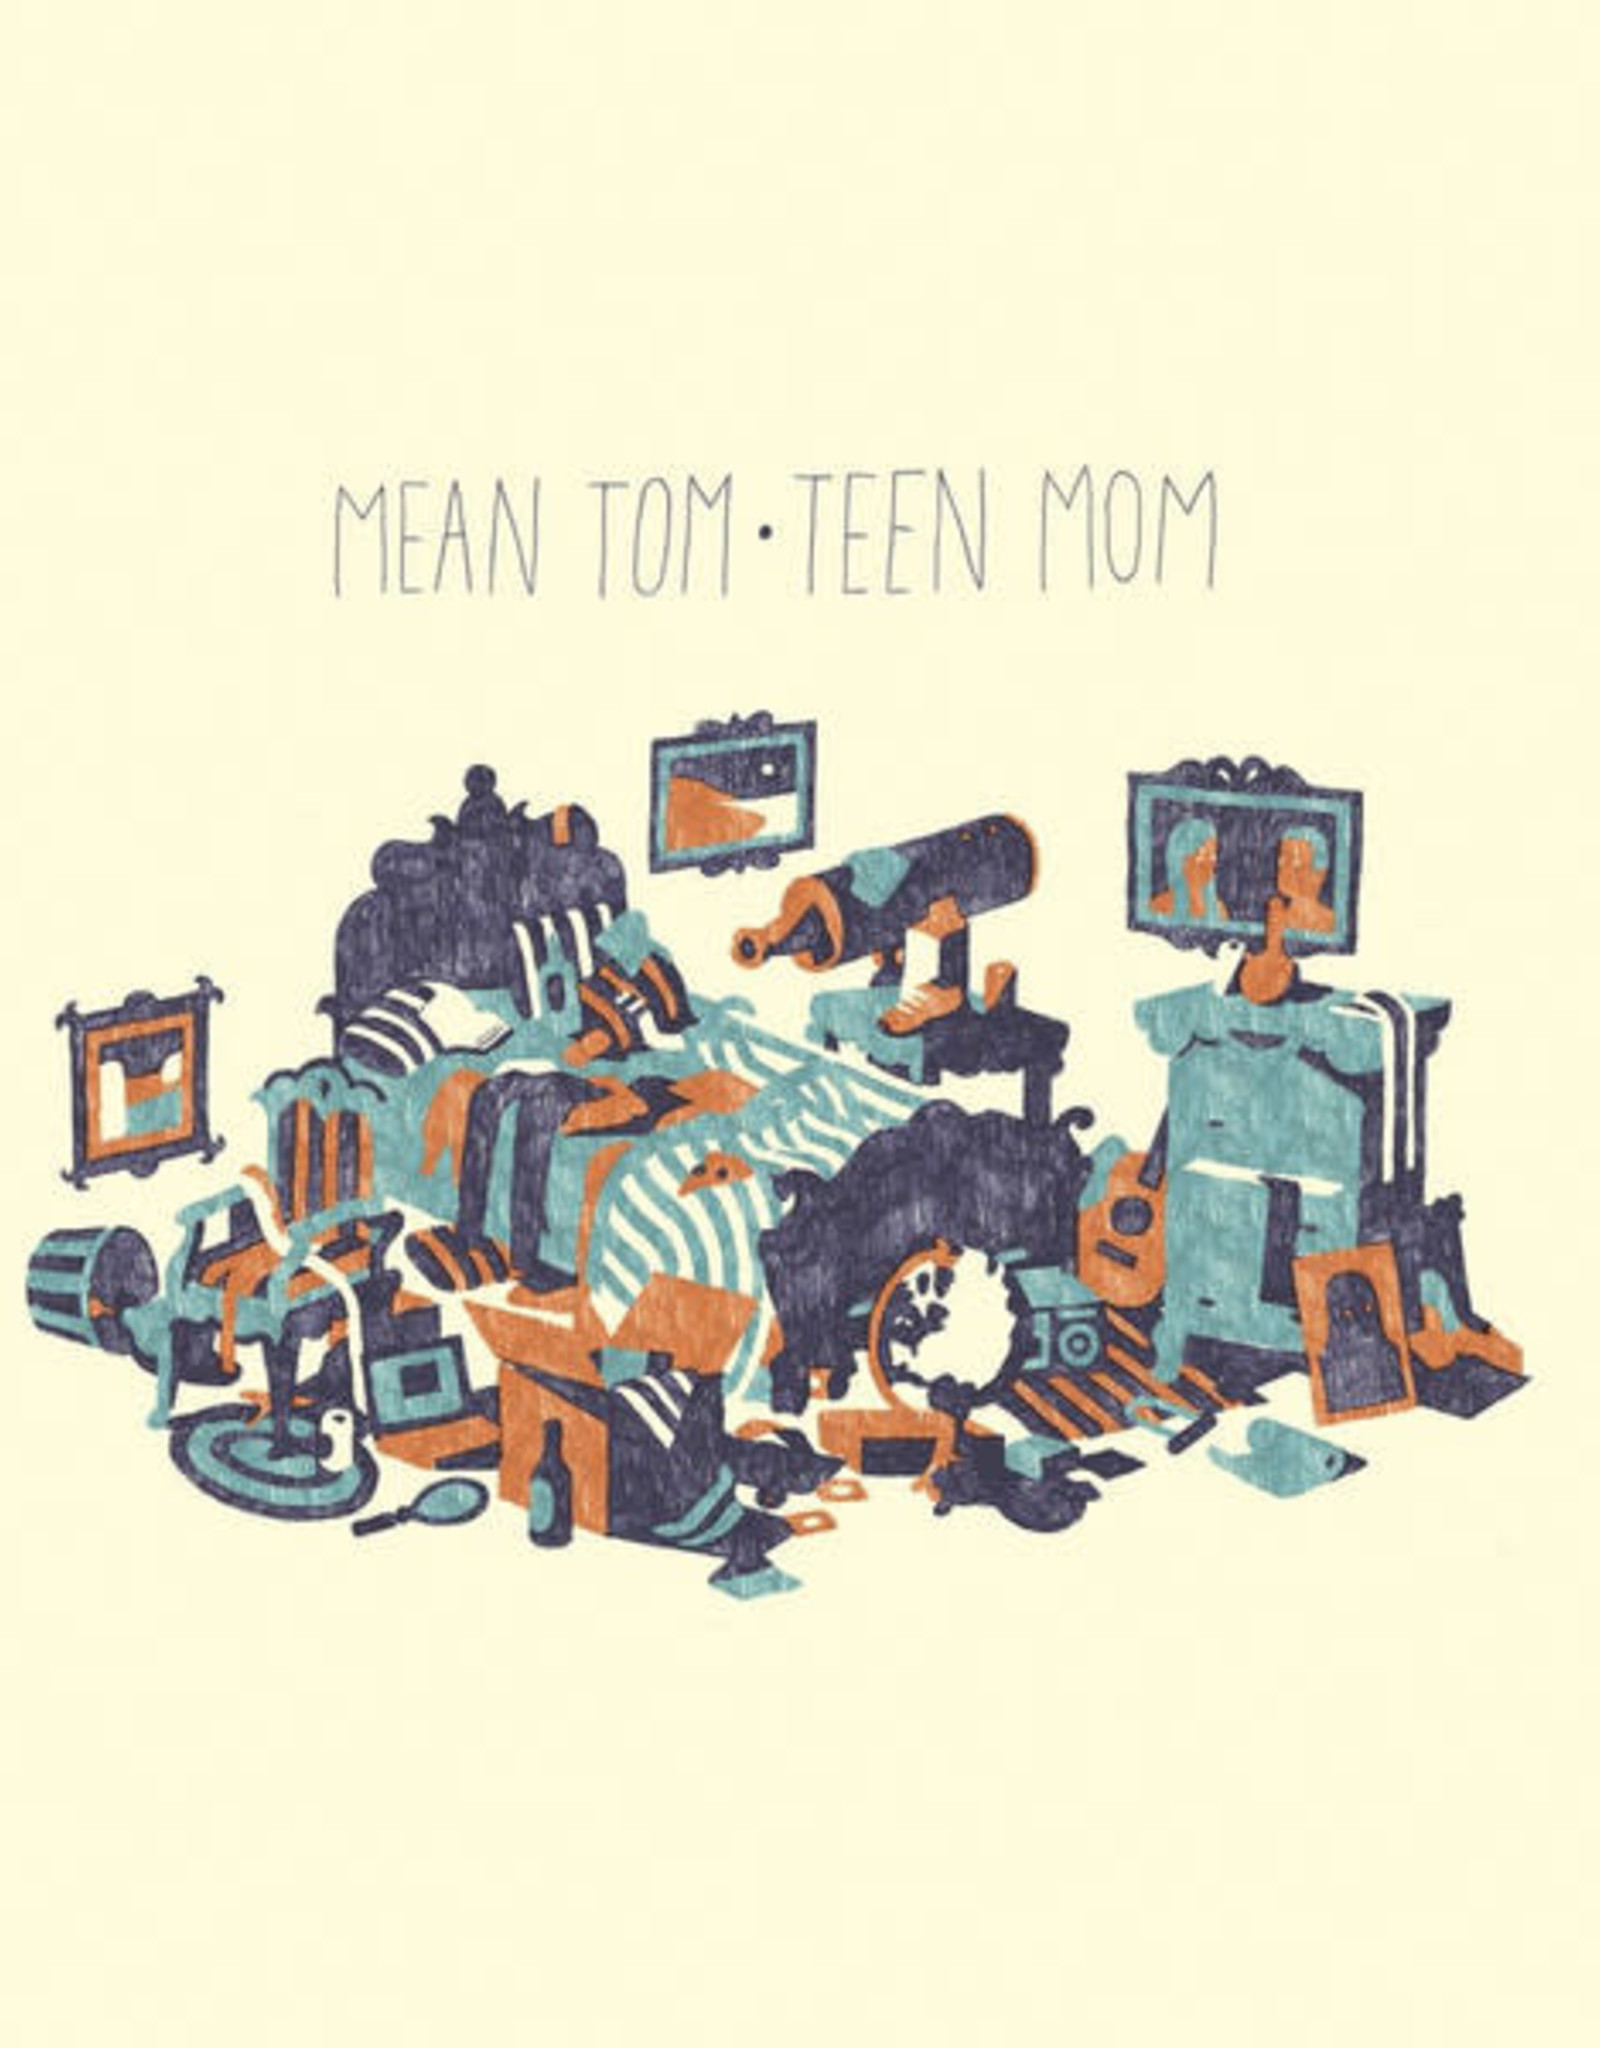 Teen Mom - Mean Tom